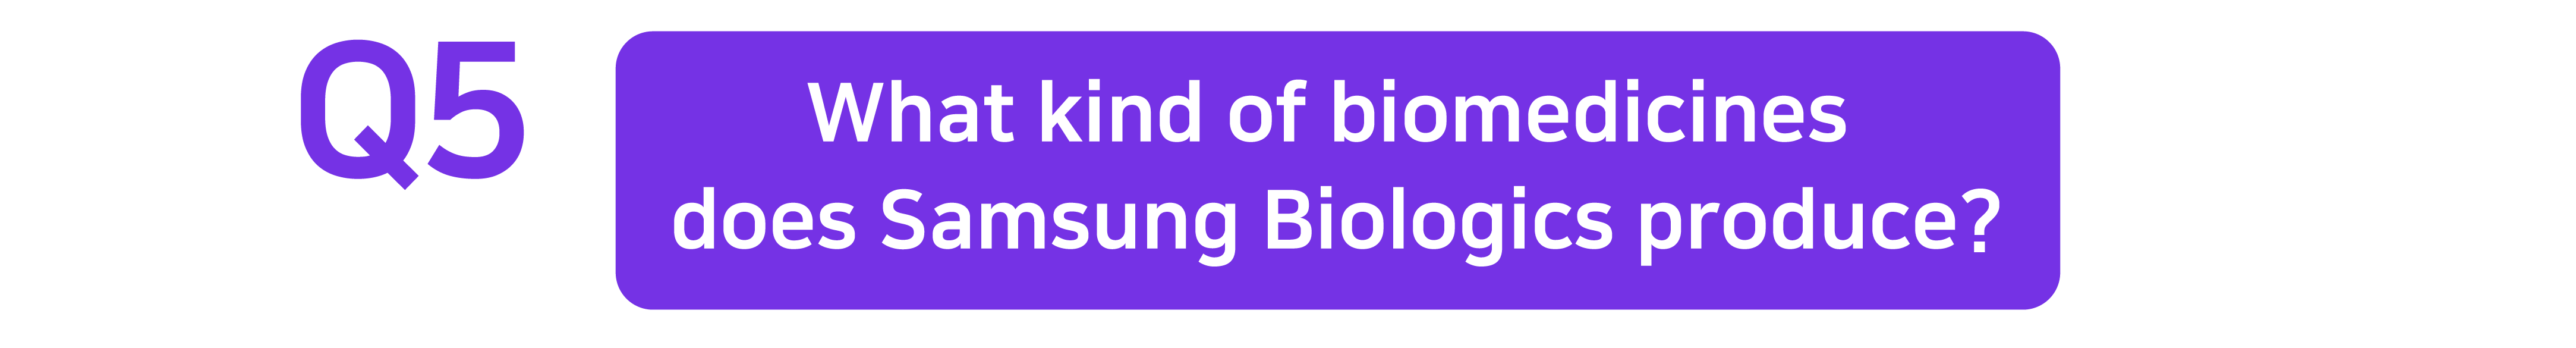 Q5. What kind of biomedicines does Samsung Biologics produce?